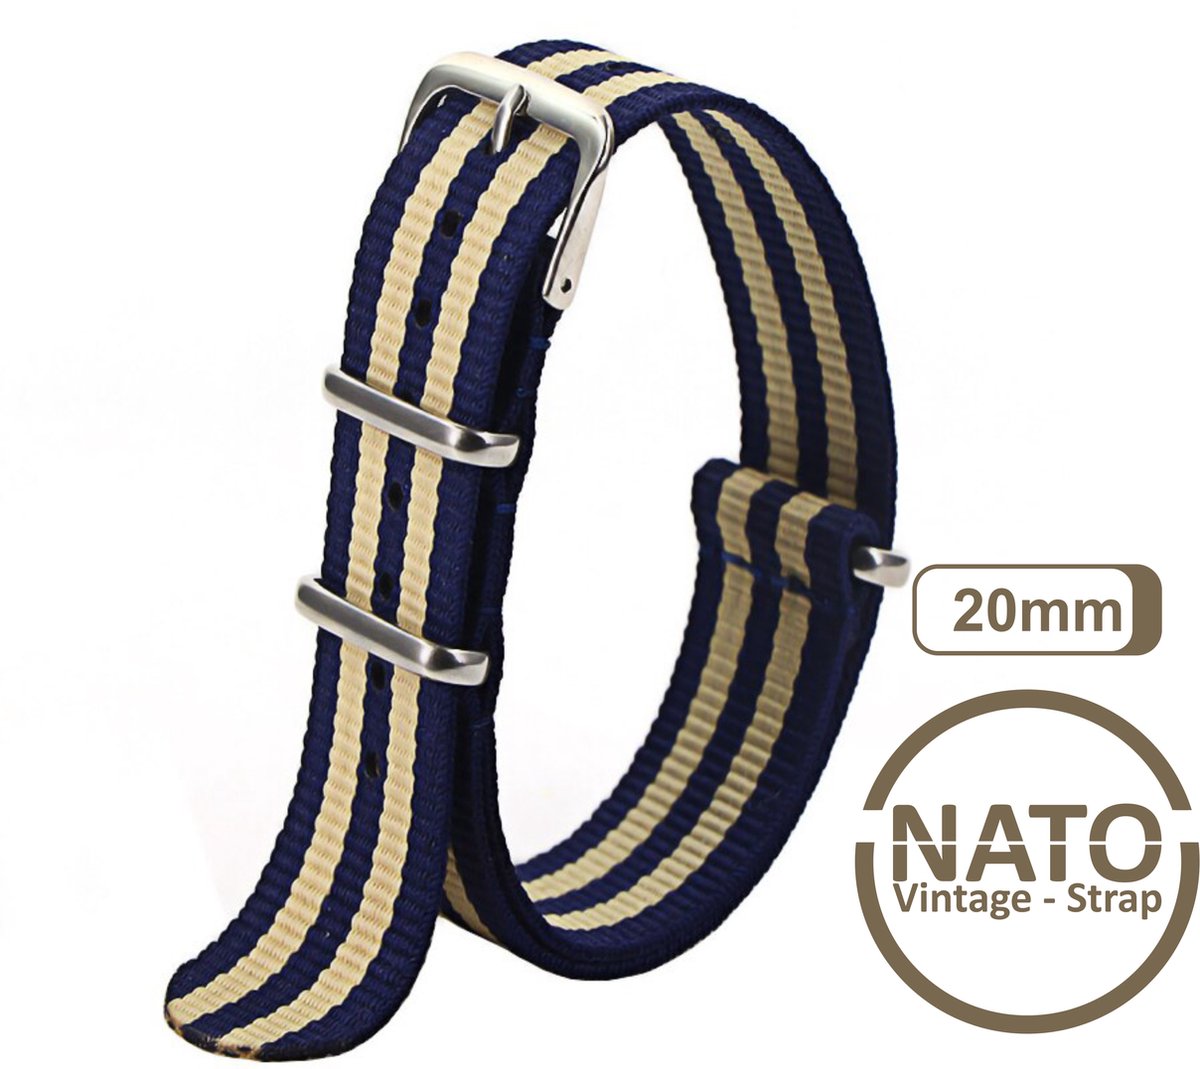 20mm Nato Strap Blauw Khaki - Goud streep - Vintage James Bond - Nato Strap collectie - Mannen - Horlogebanden - Gestreept 20 mm bandbreedte voor oa. Seiko Rolex Omega Casio en Citizen